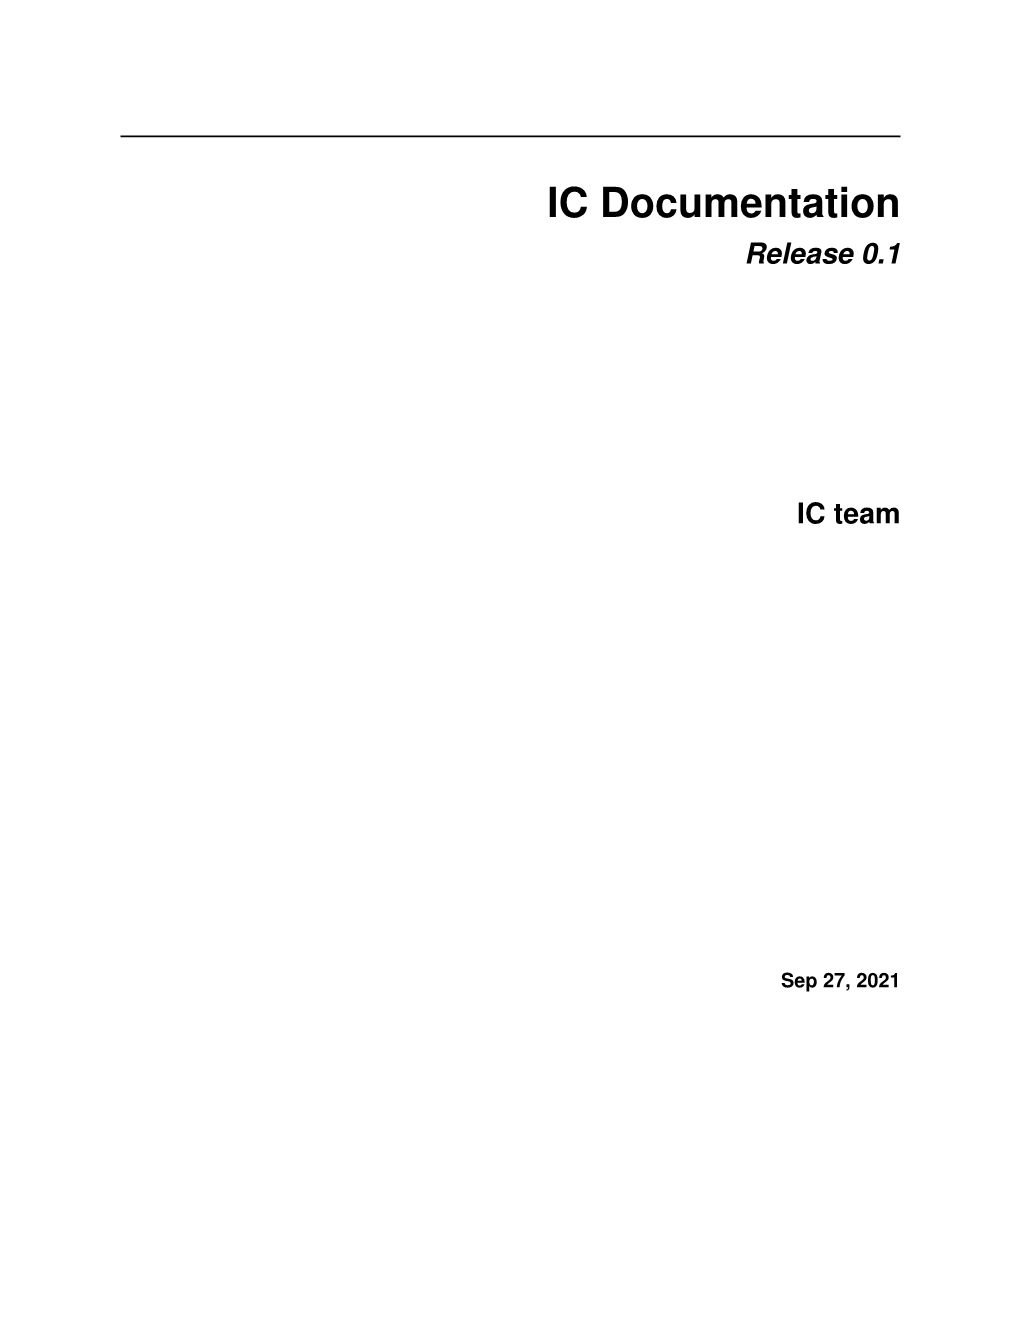 IC Documentation Release 0.1